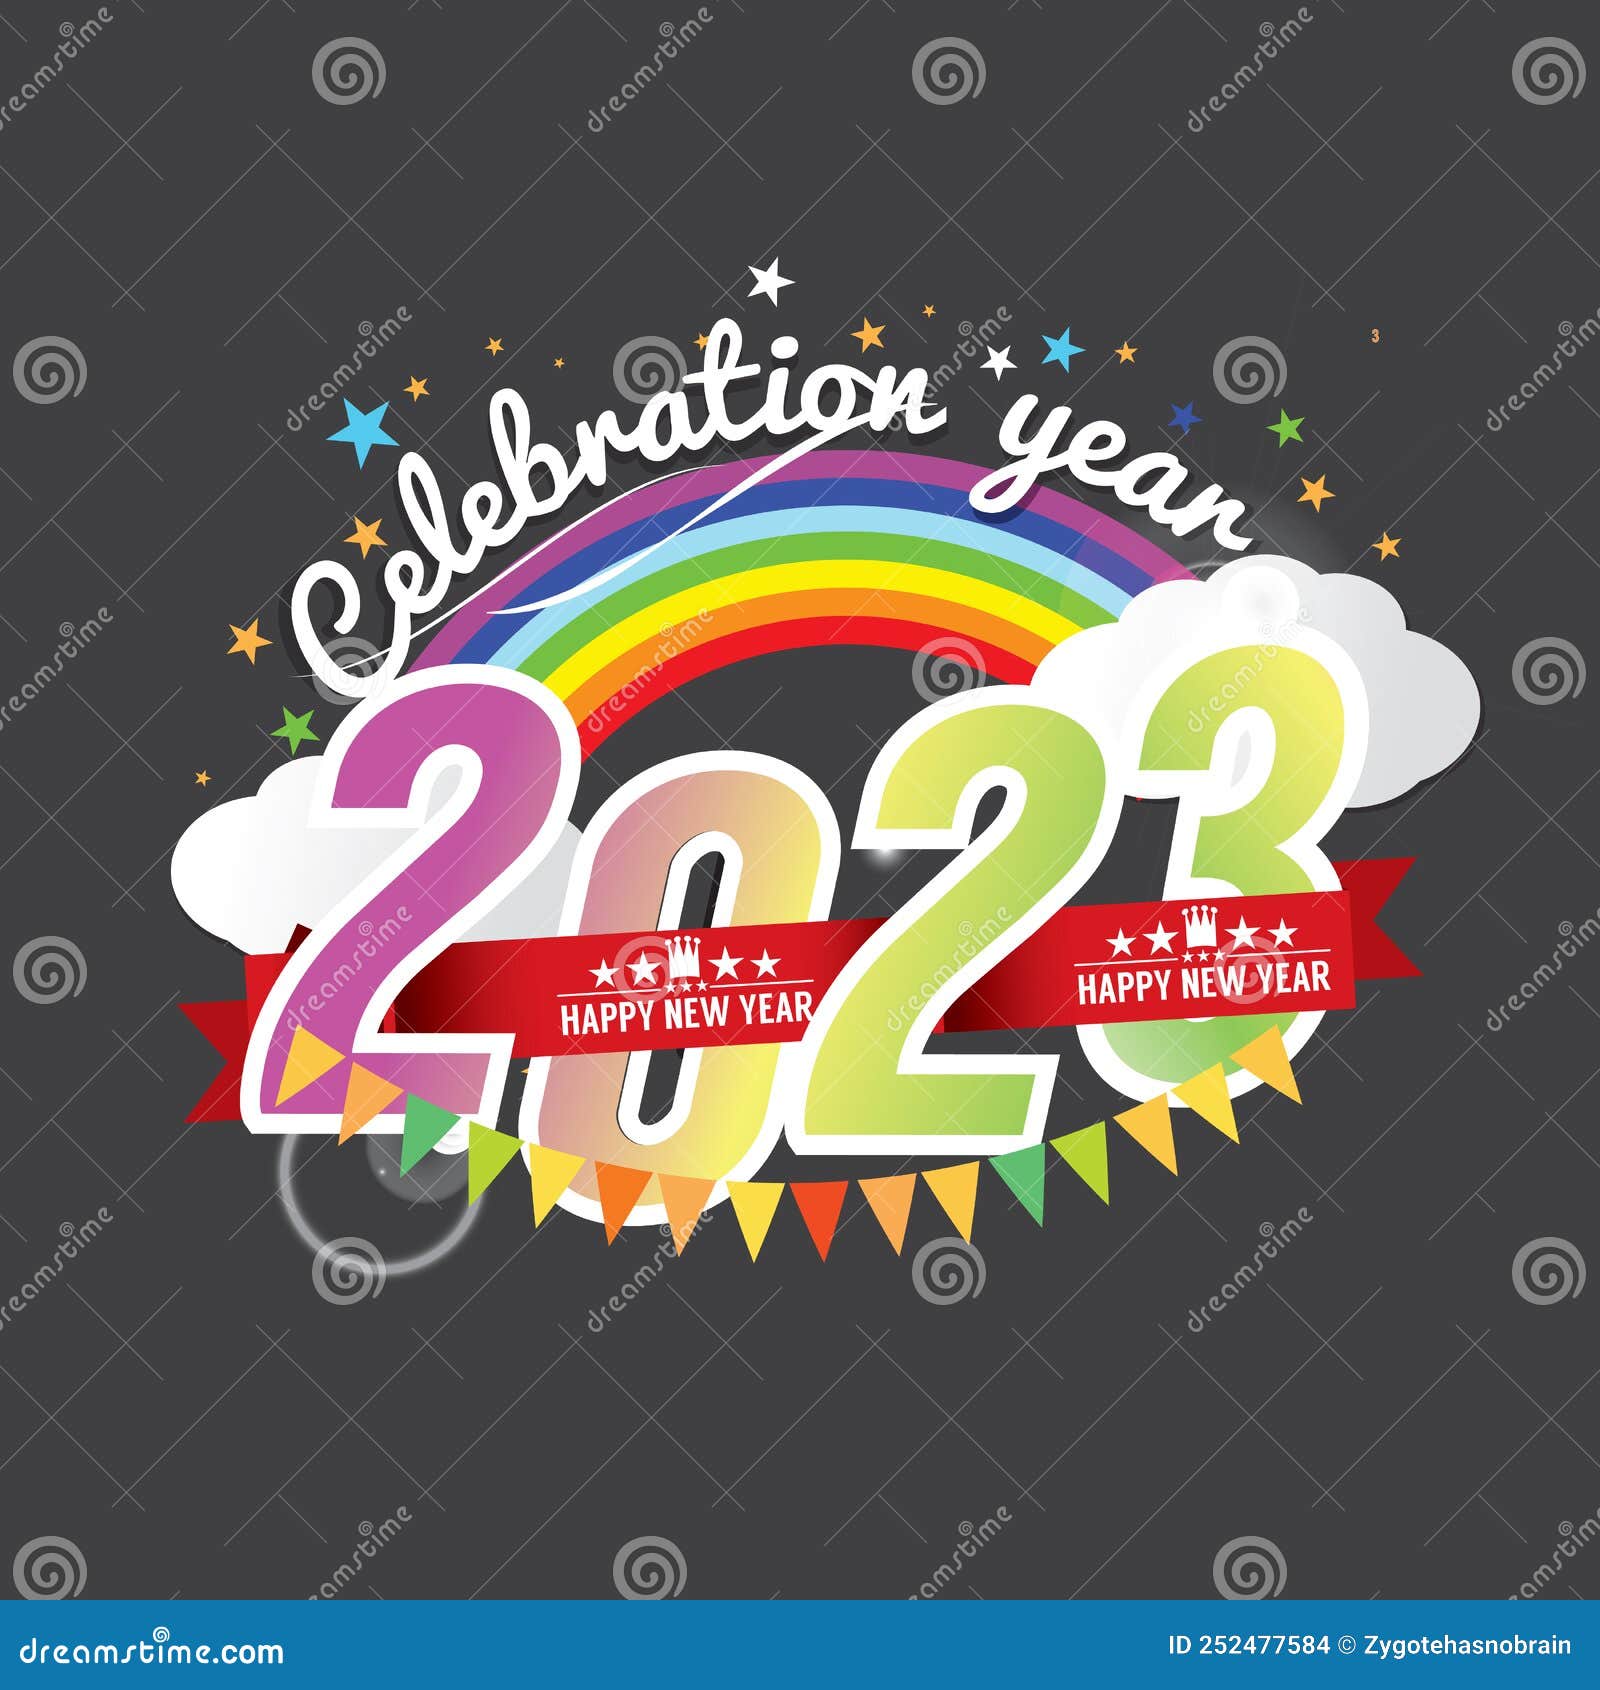 2023 Happy New Year Celebration Logo Design Vector Stock Vector ...